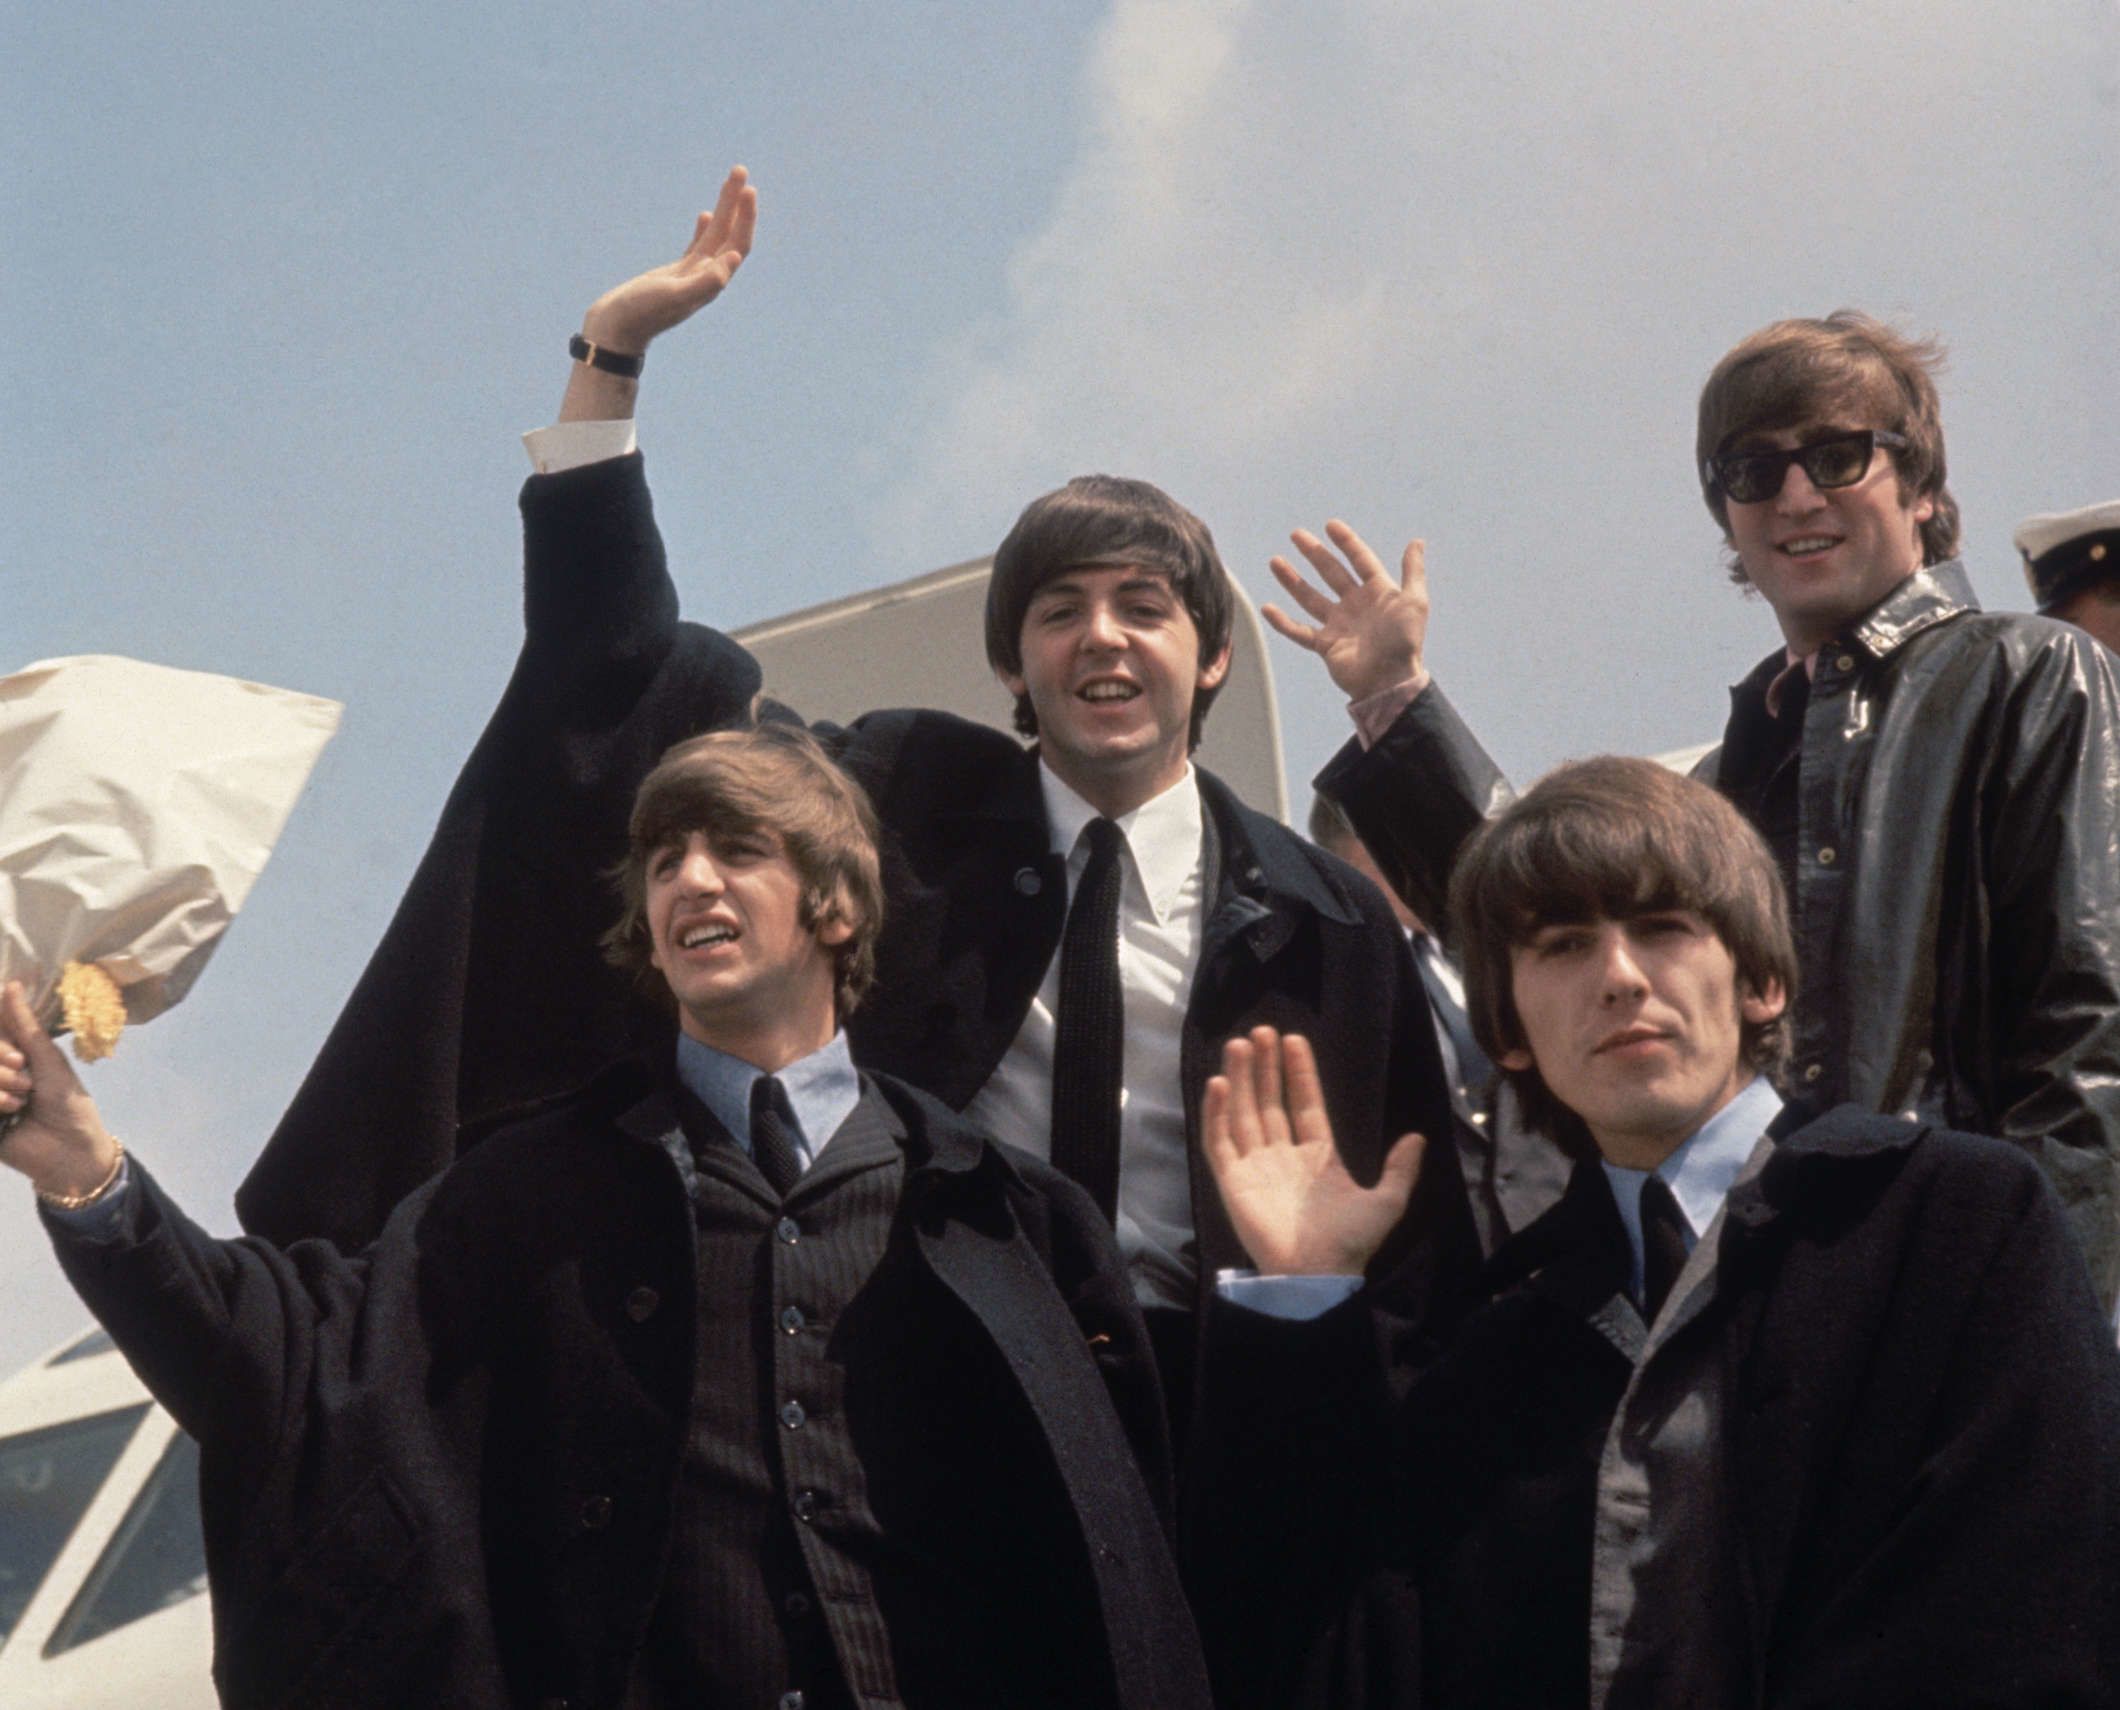 Ringo Starr: The Beatles Would Never Fake John Lennon's Voice via AI